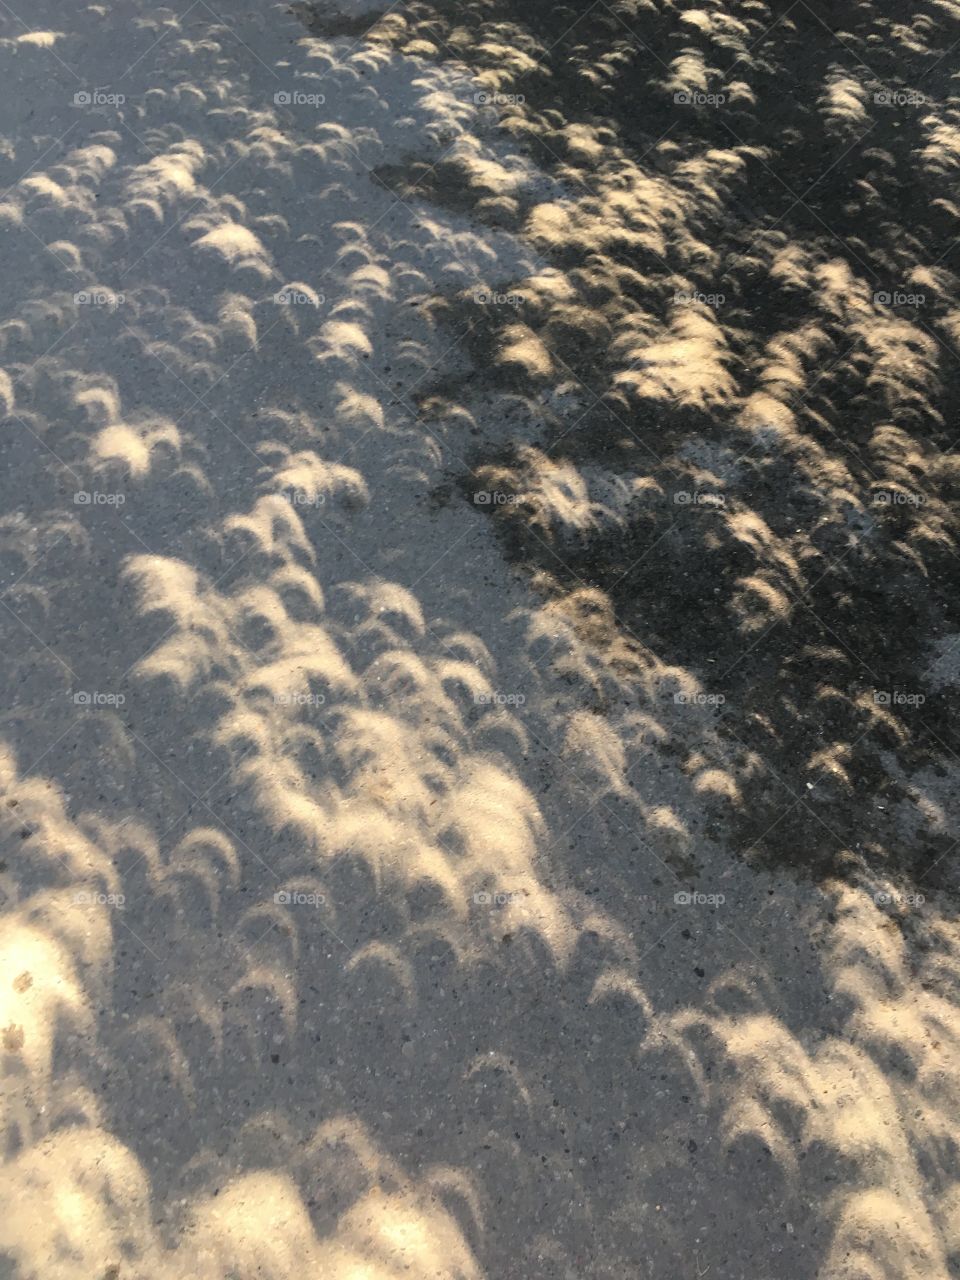 partial eclipse 2017
langley BC canada 